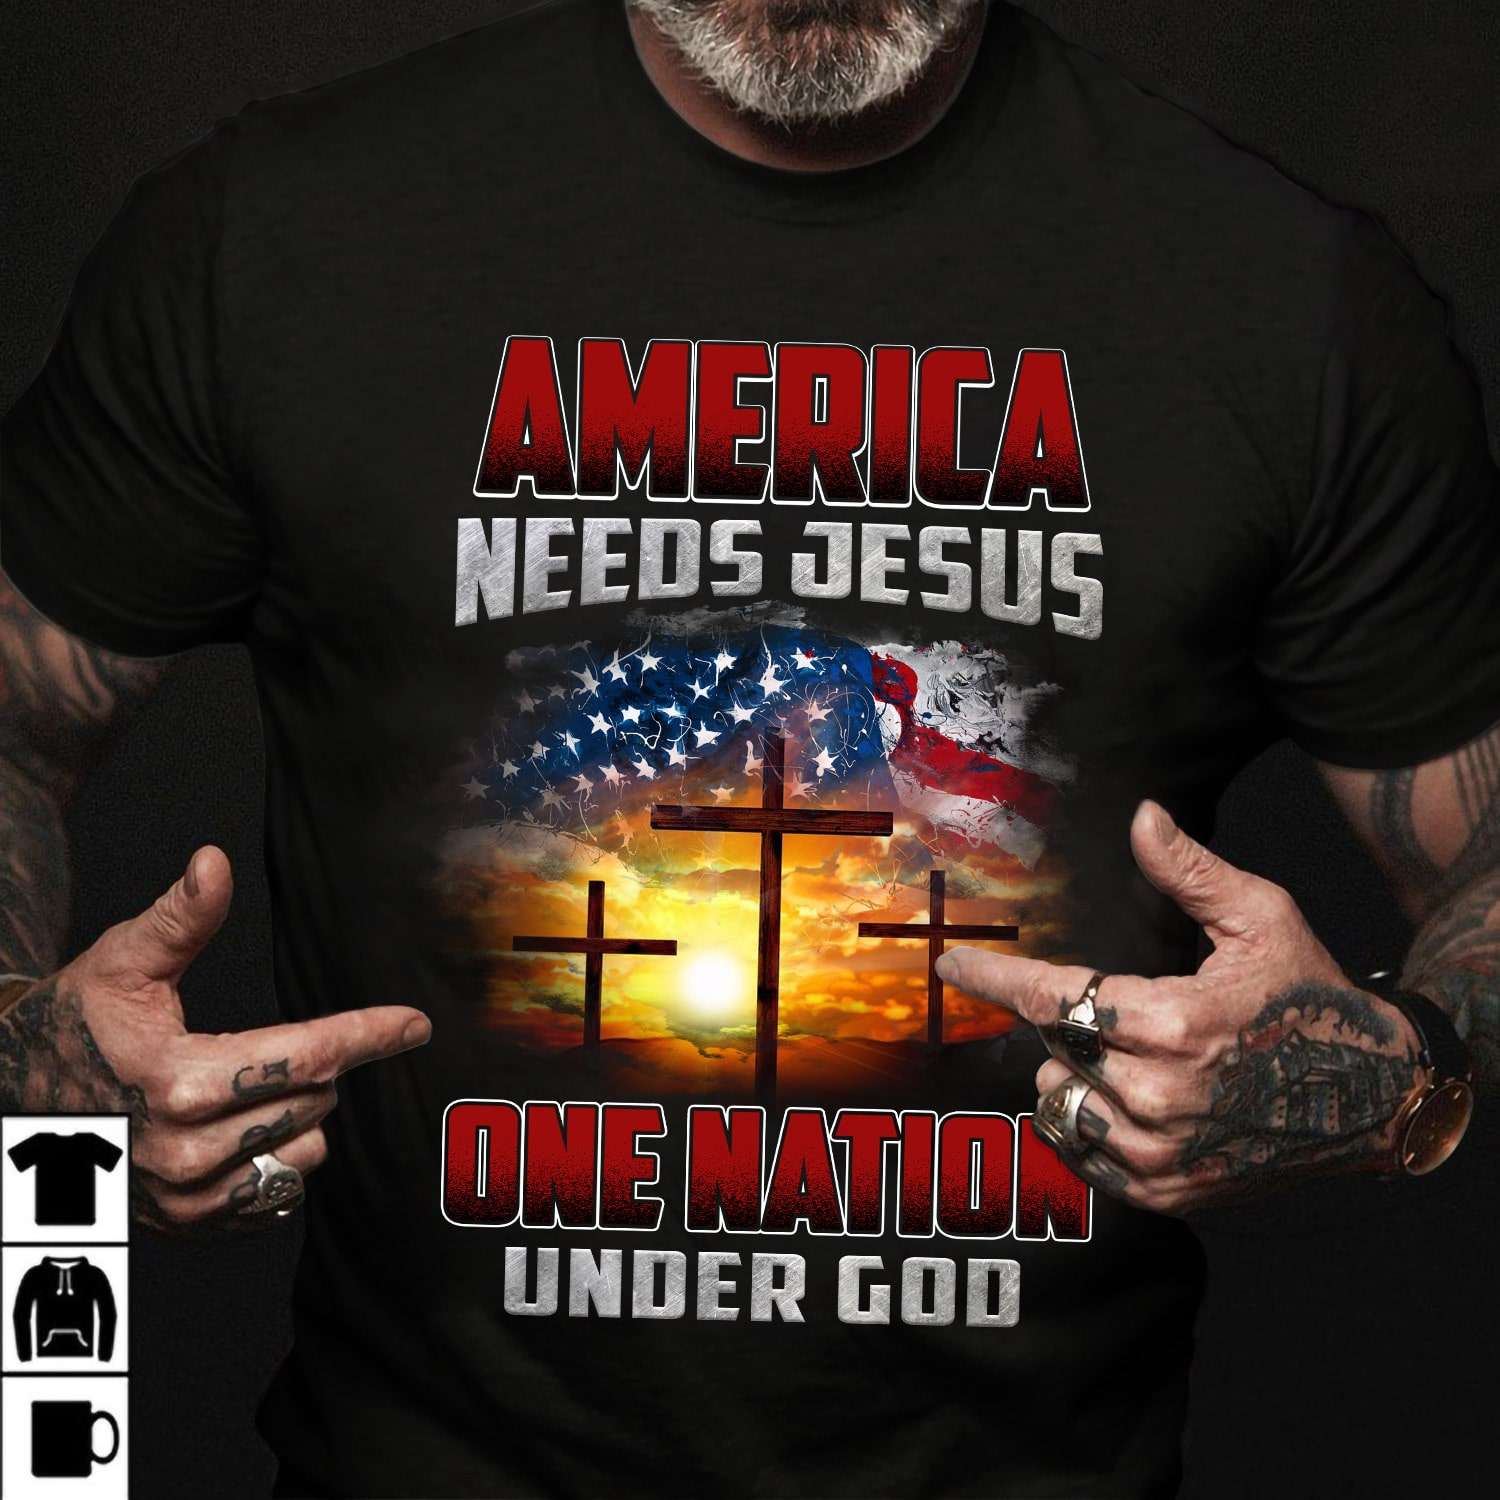 America needs Jesus - One nation under God, America flag